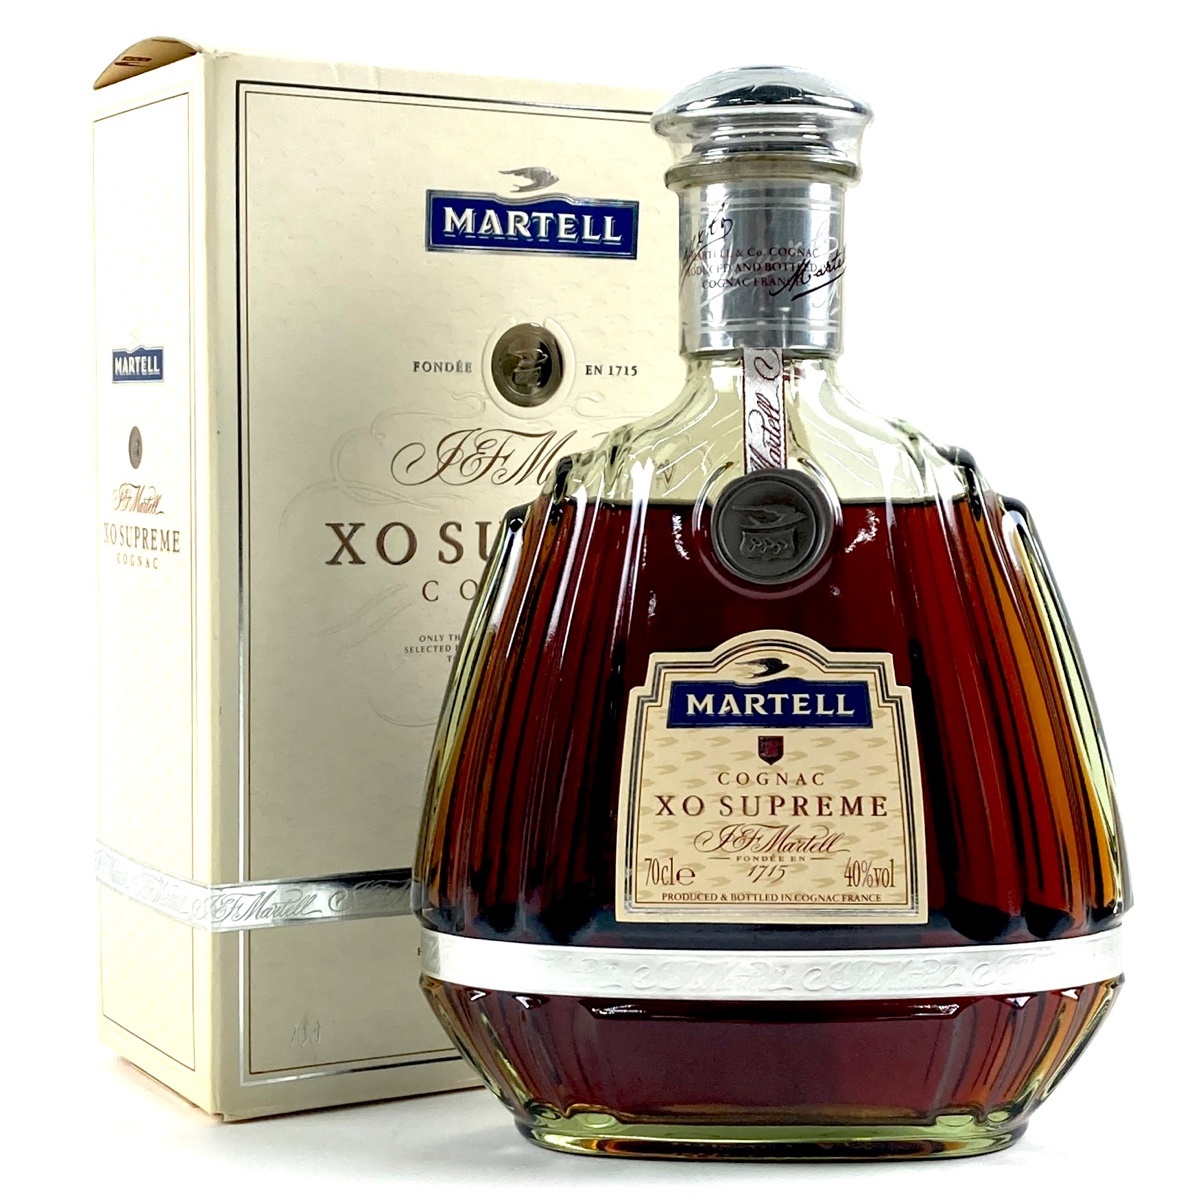  Martell MARTELL XOs pulley m green bottle 700ml brandy cognac [ old sake ]